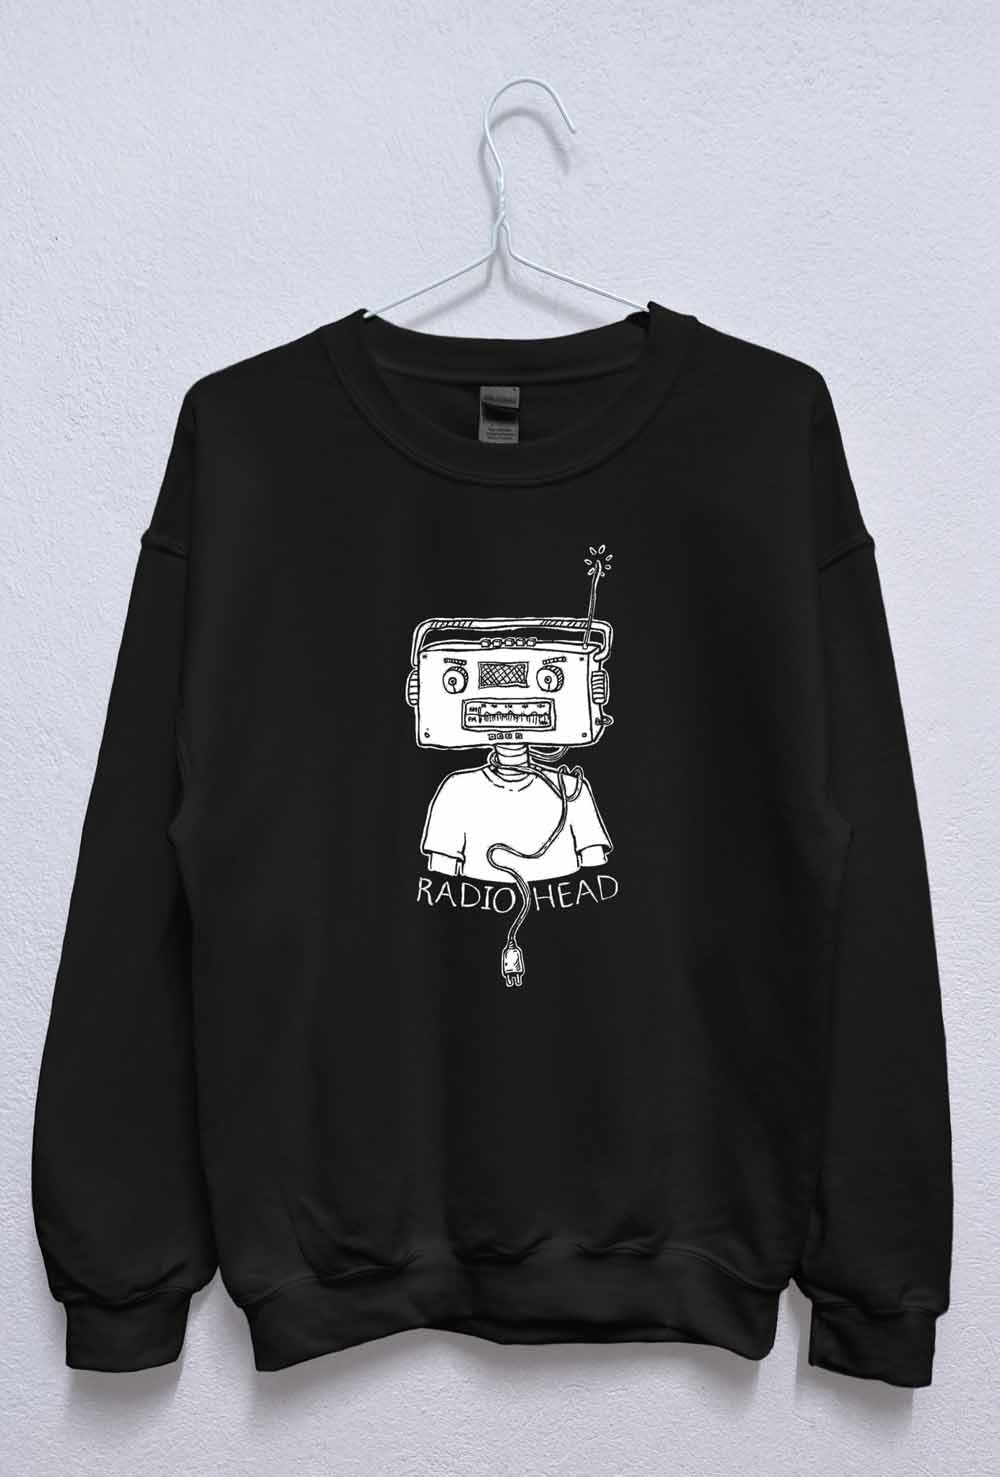 radiohead sweatshirt black